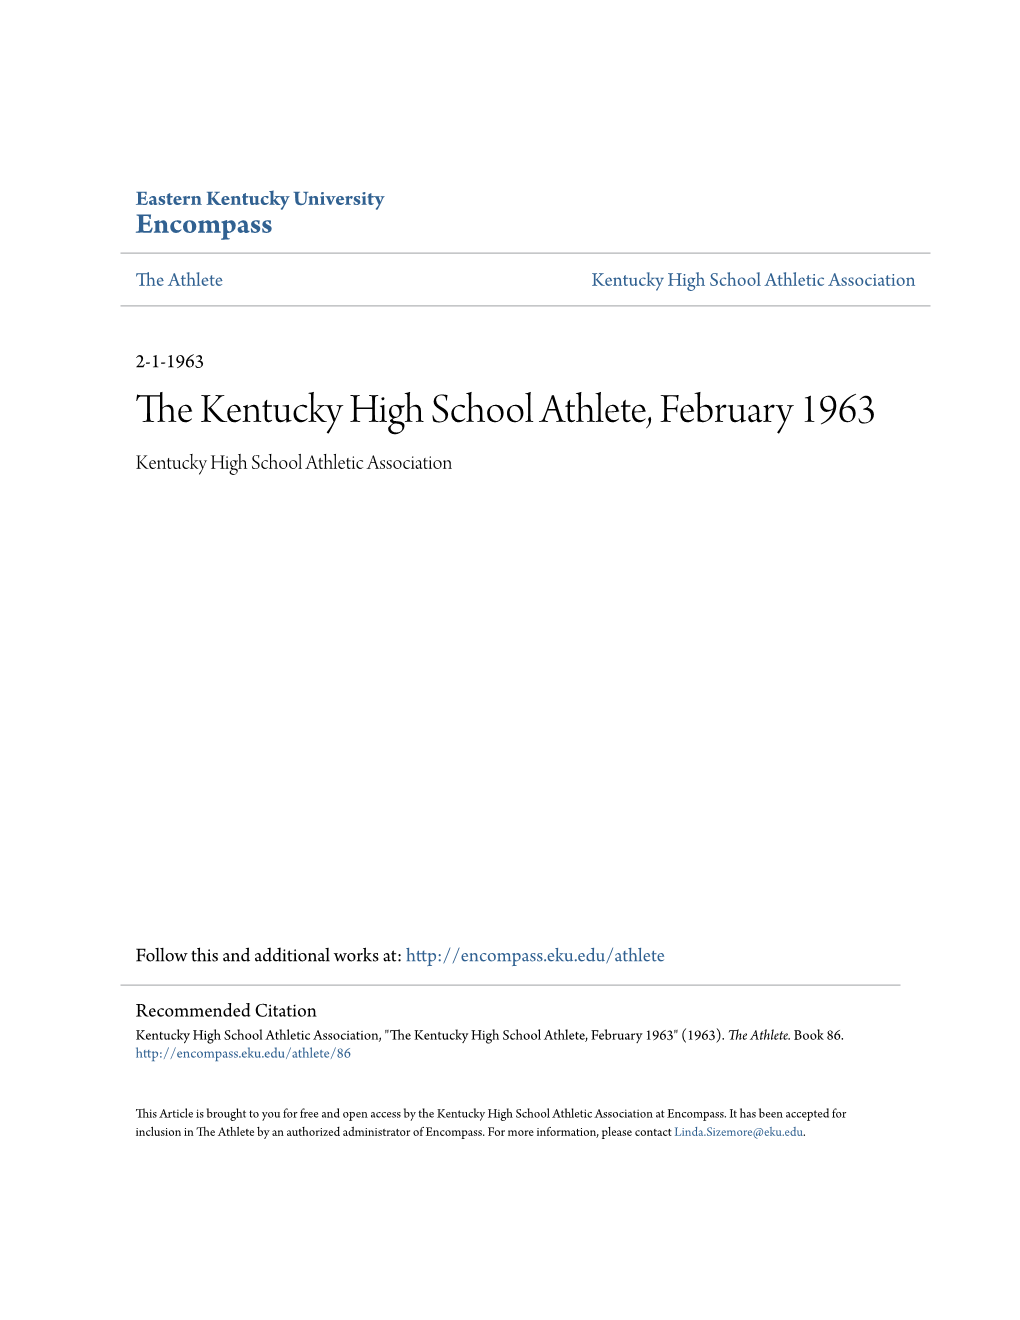 The Kentucky High School Athlete, February 1963 Kentucky High School Athletic Association